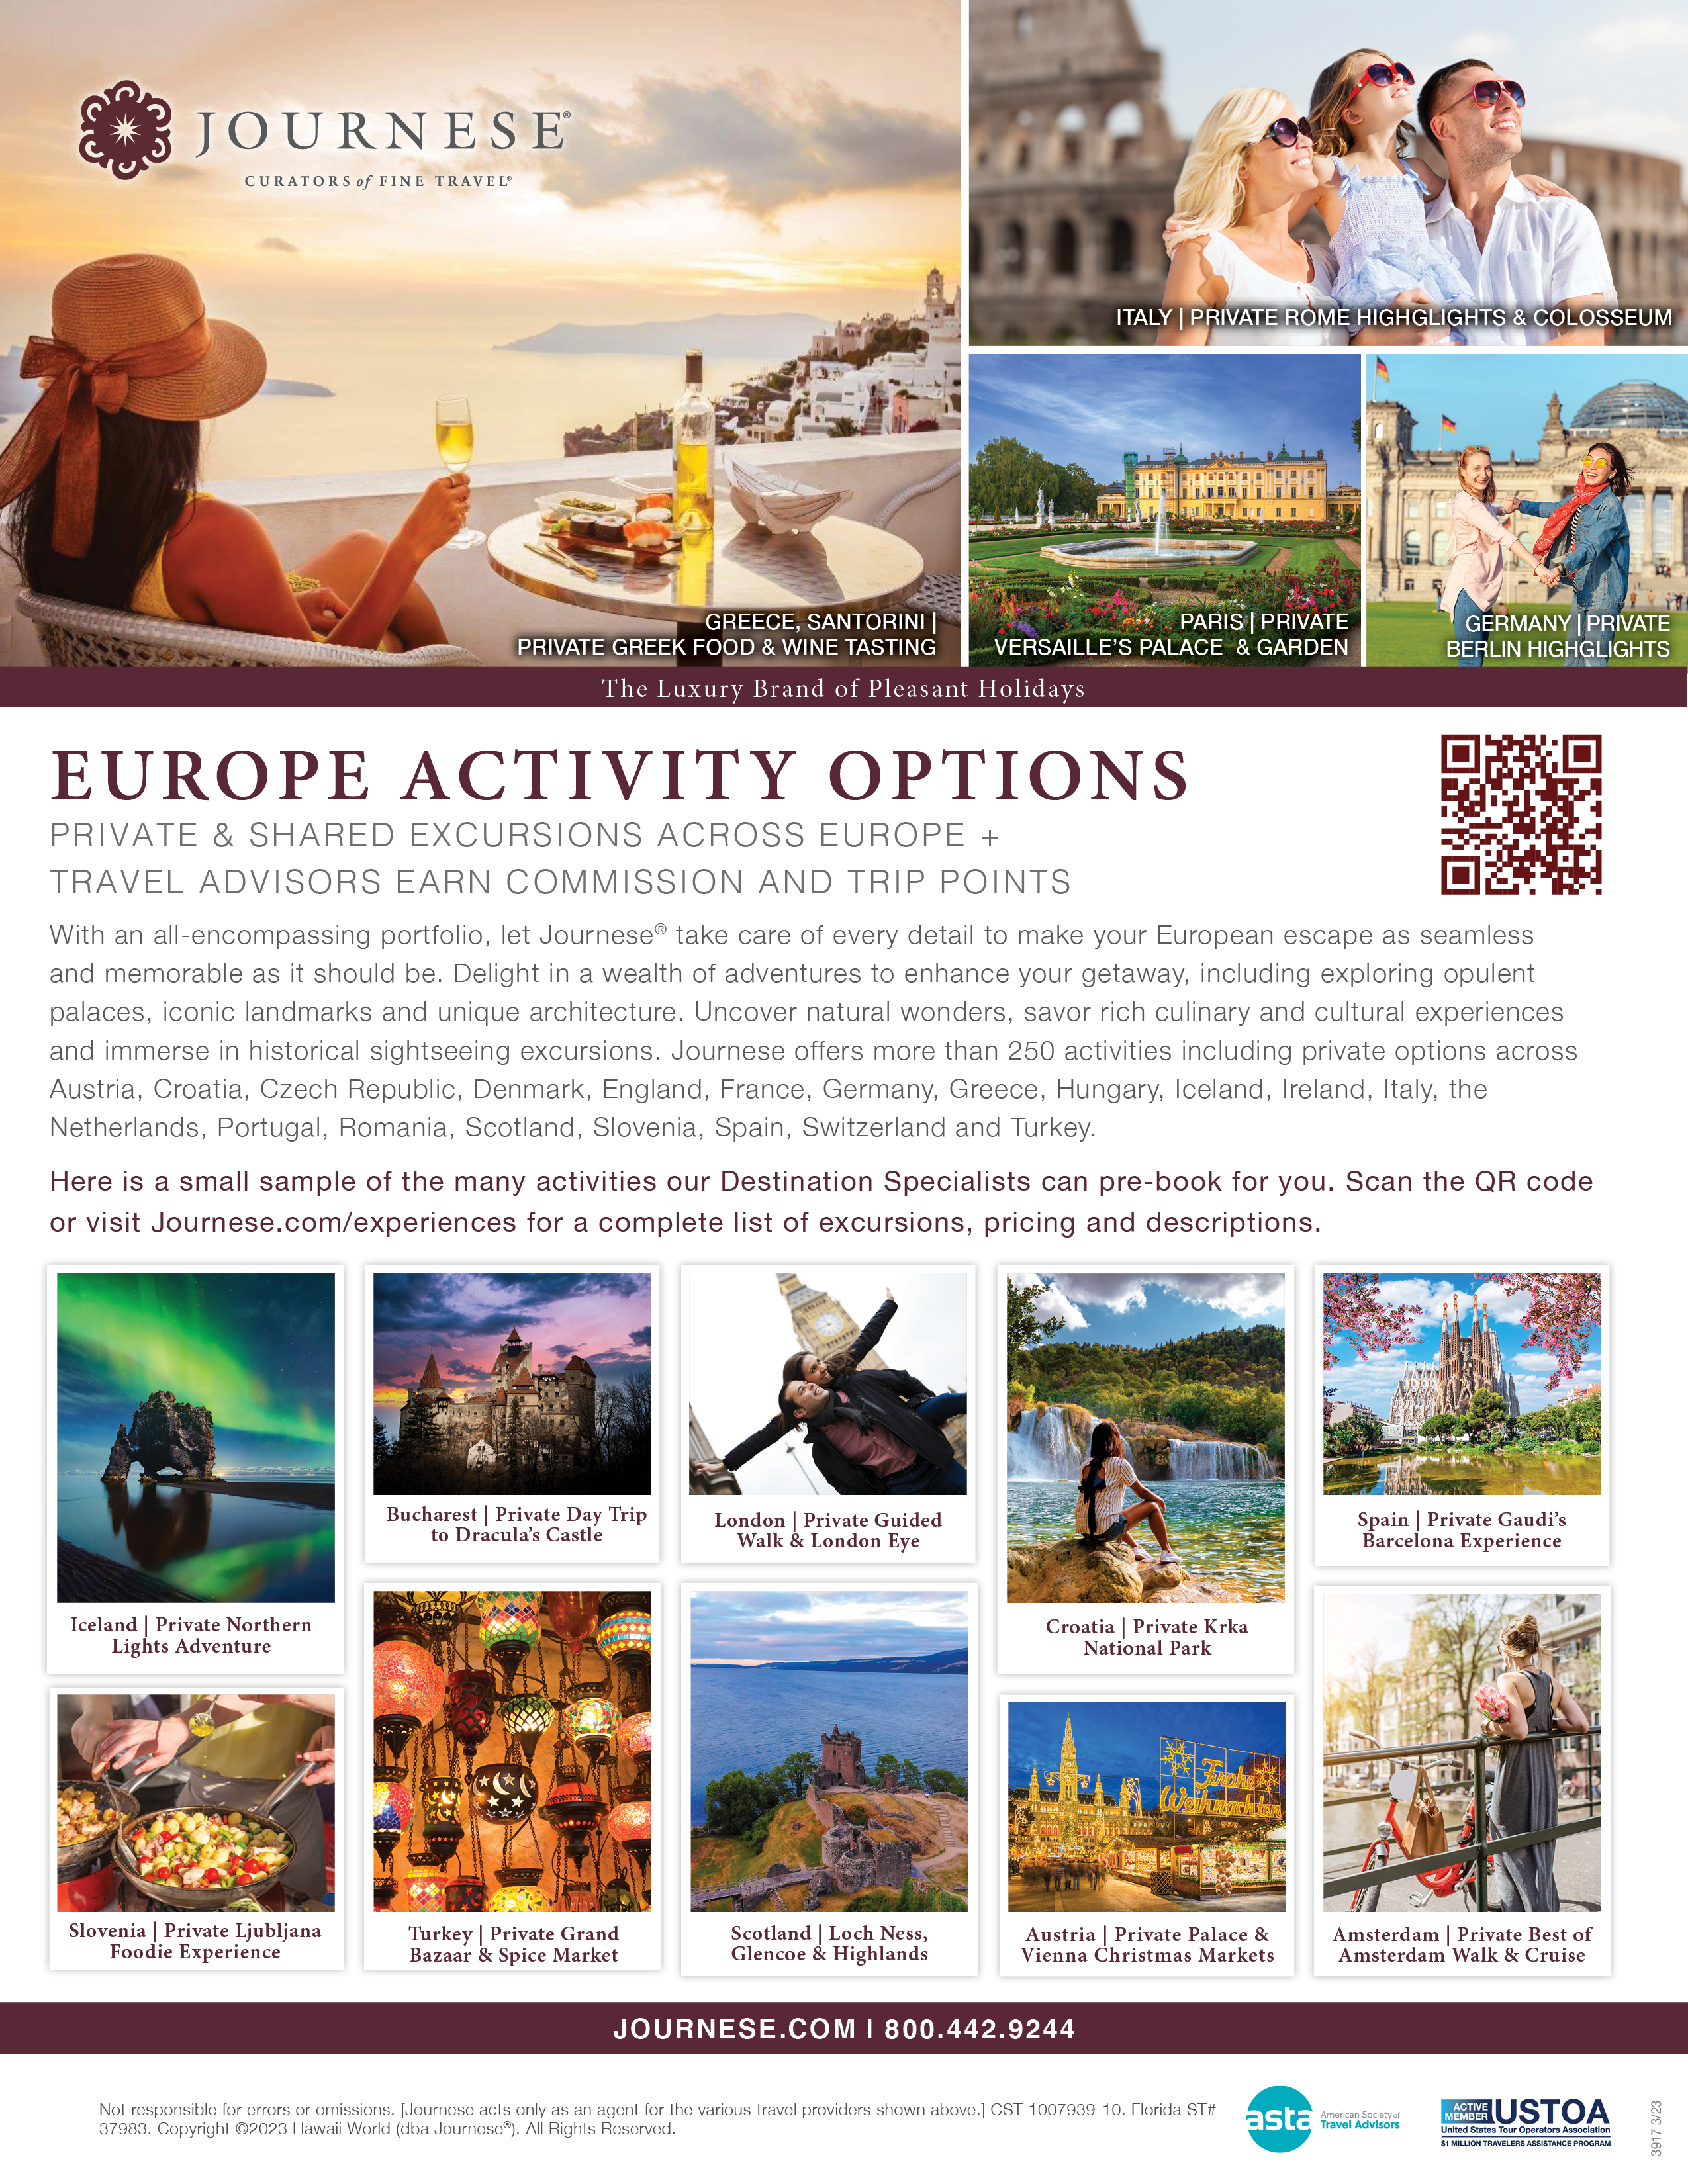 united arab emirates travel brochure